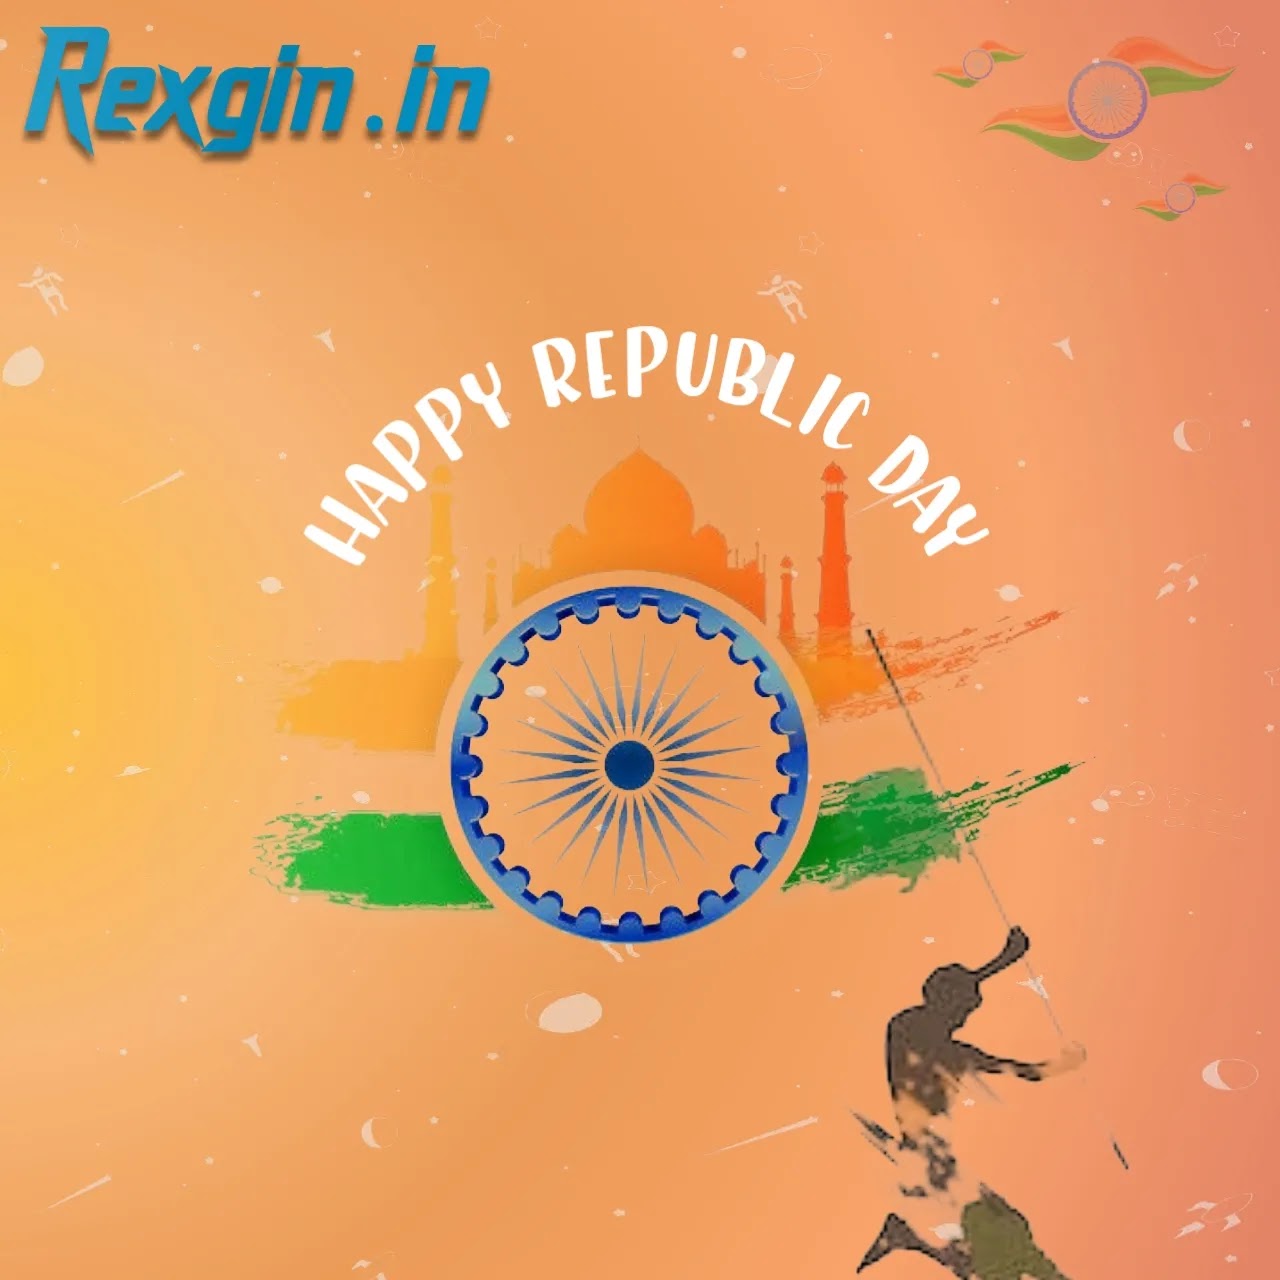 essay on republic day in hindi